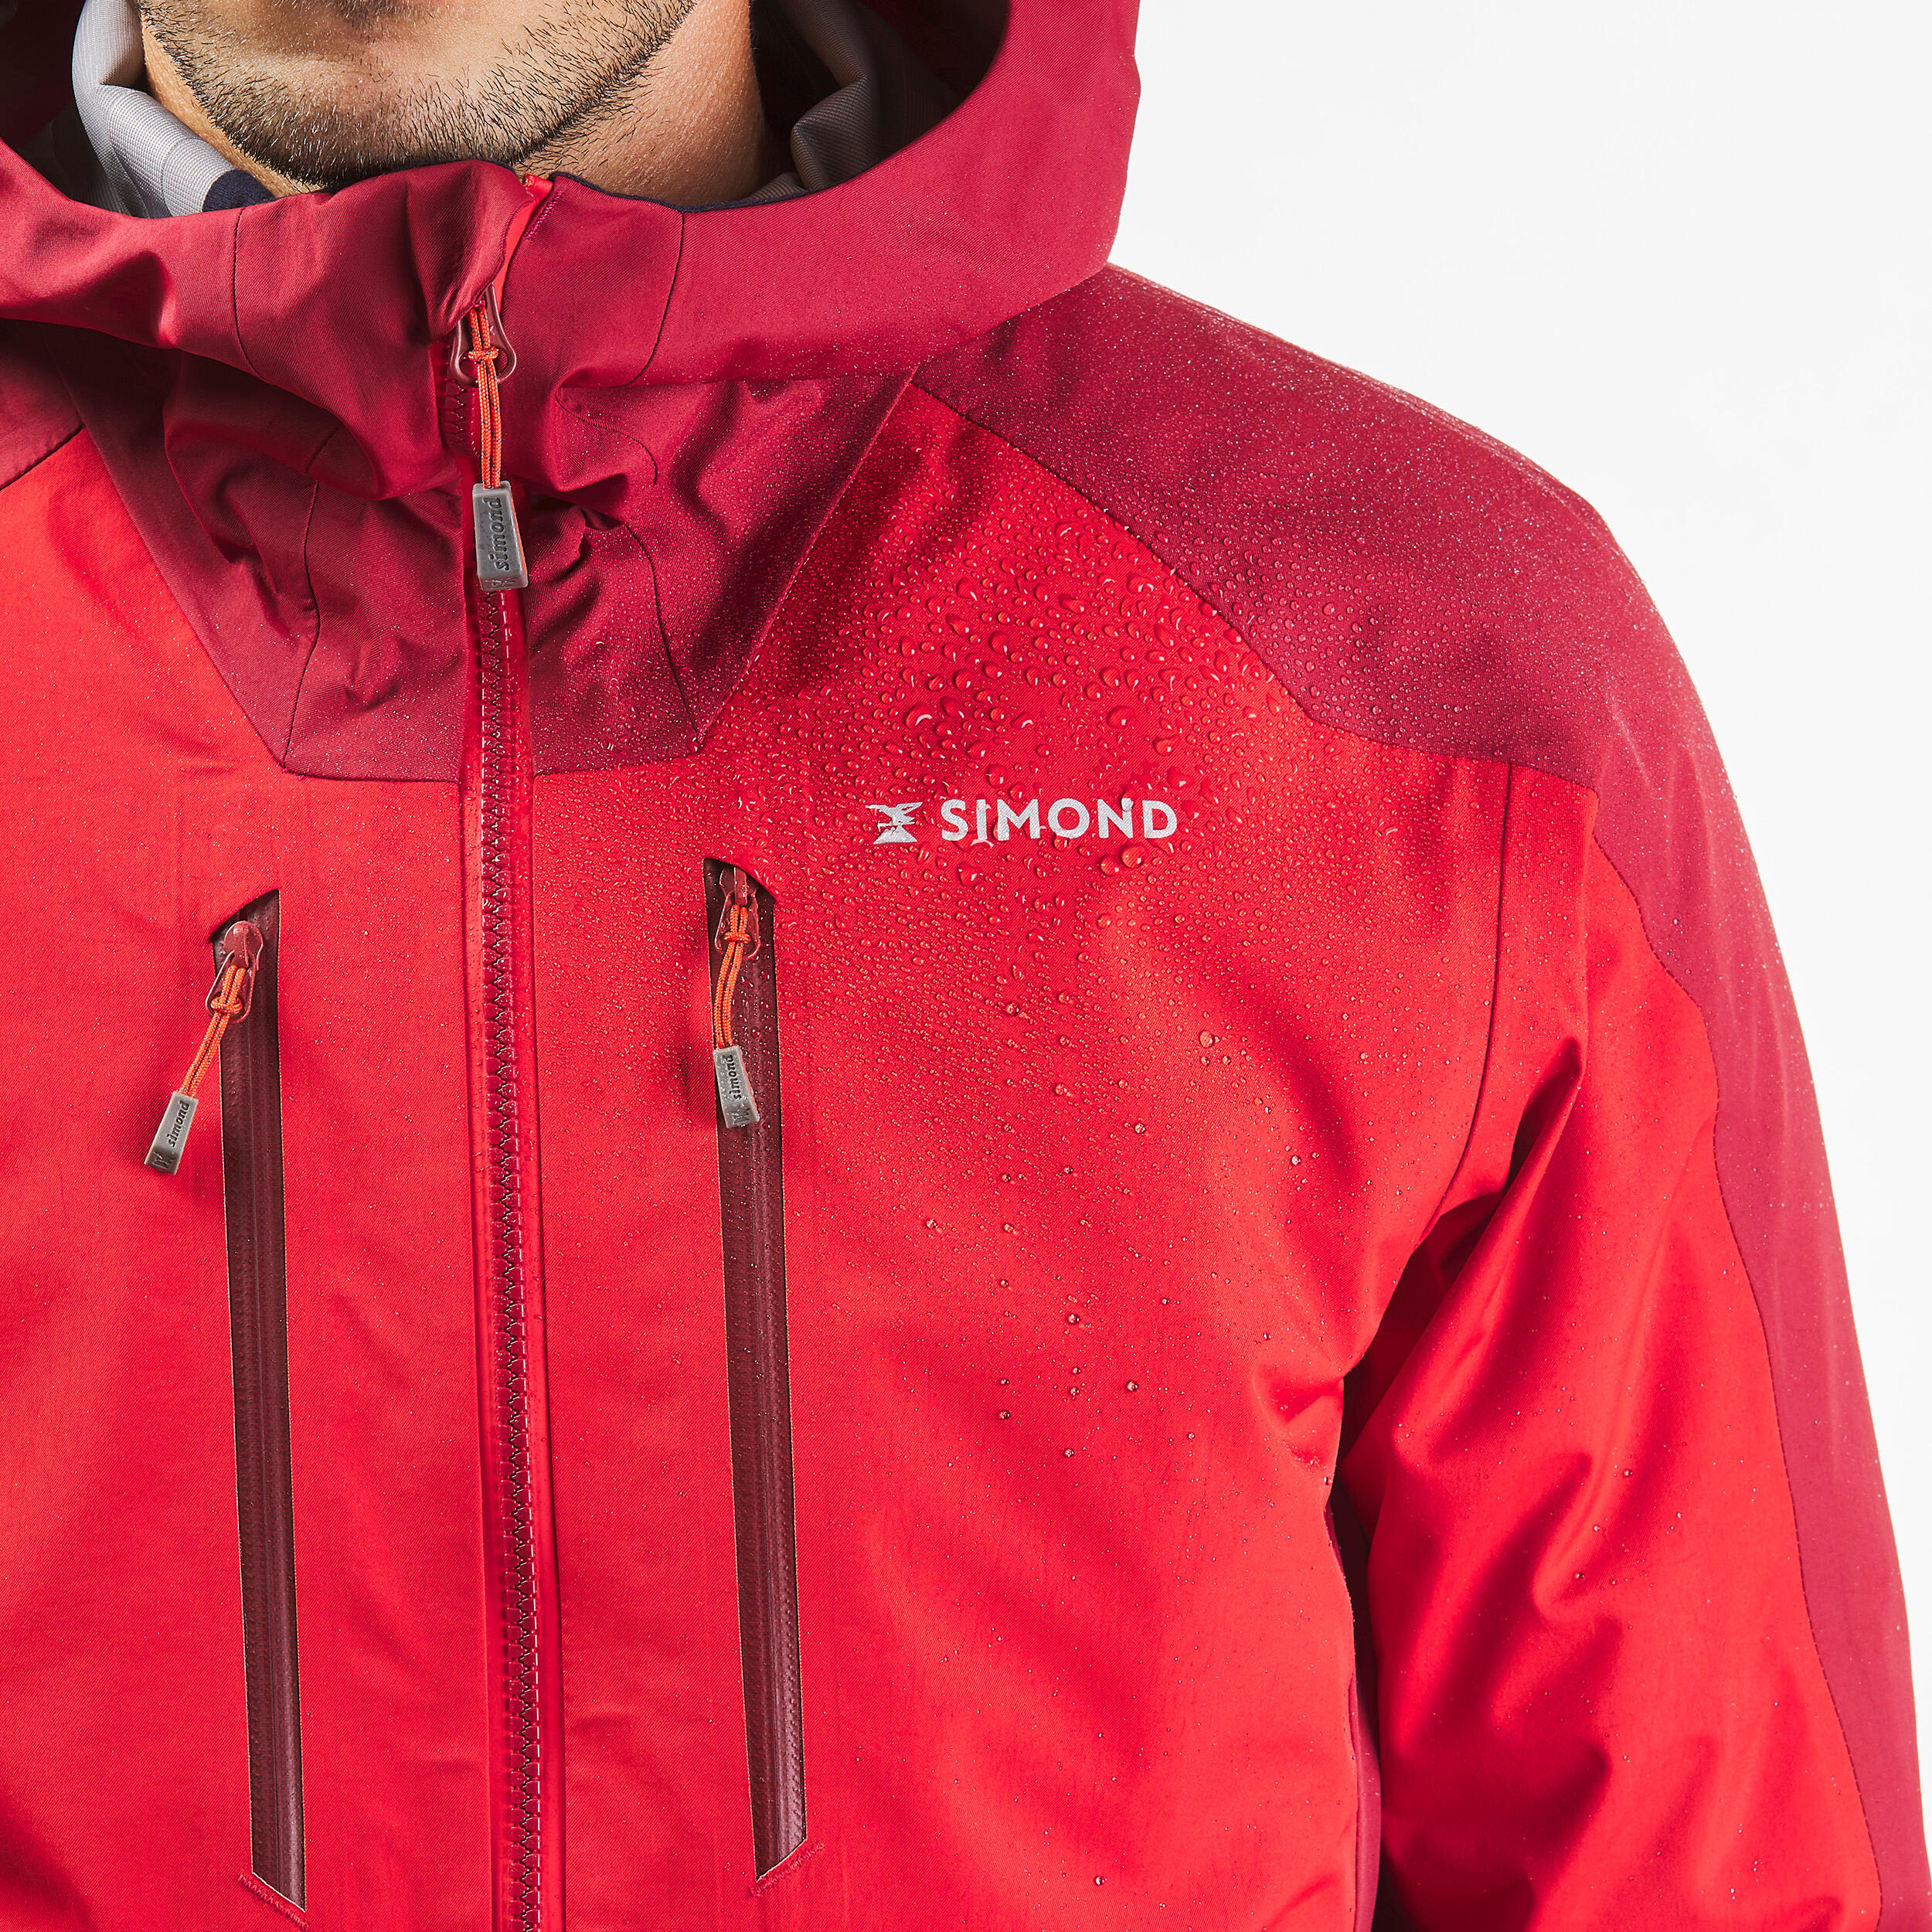 Men’s waterproof durable mountaineering jacket, red 16/17